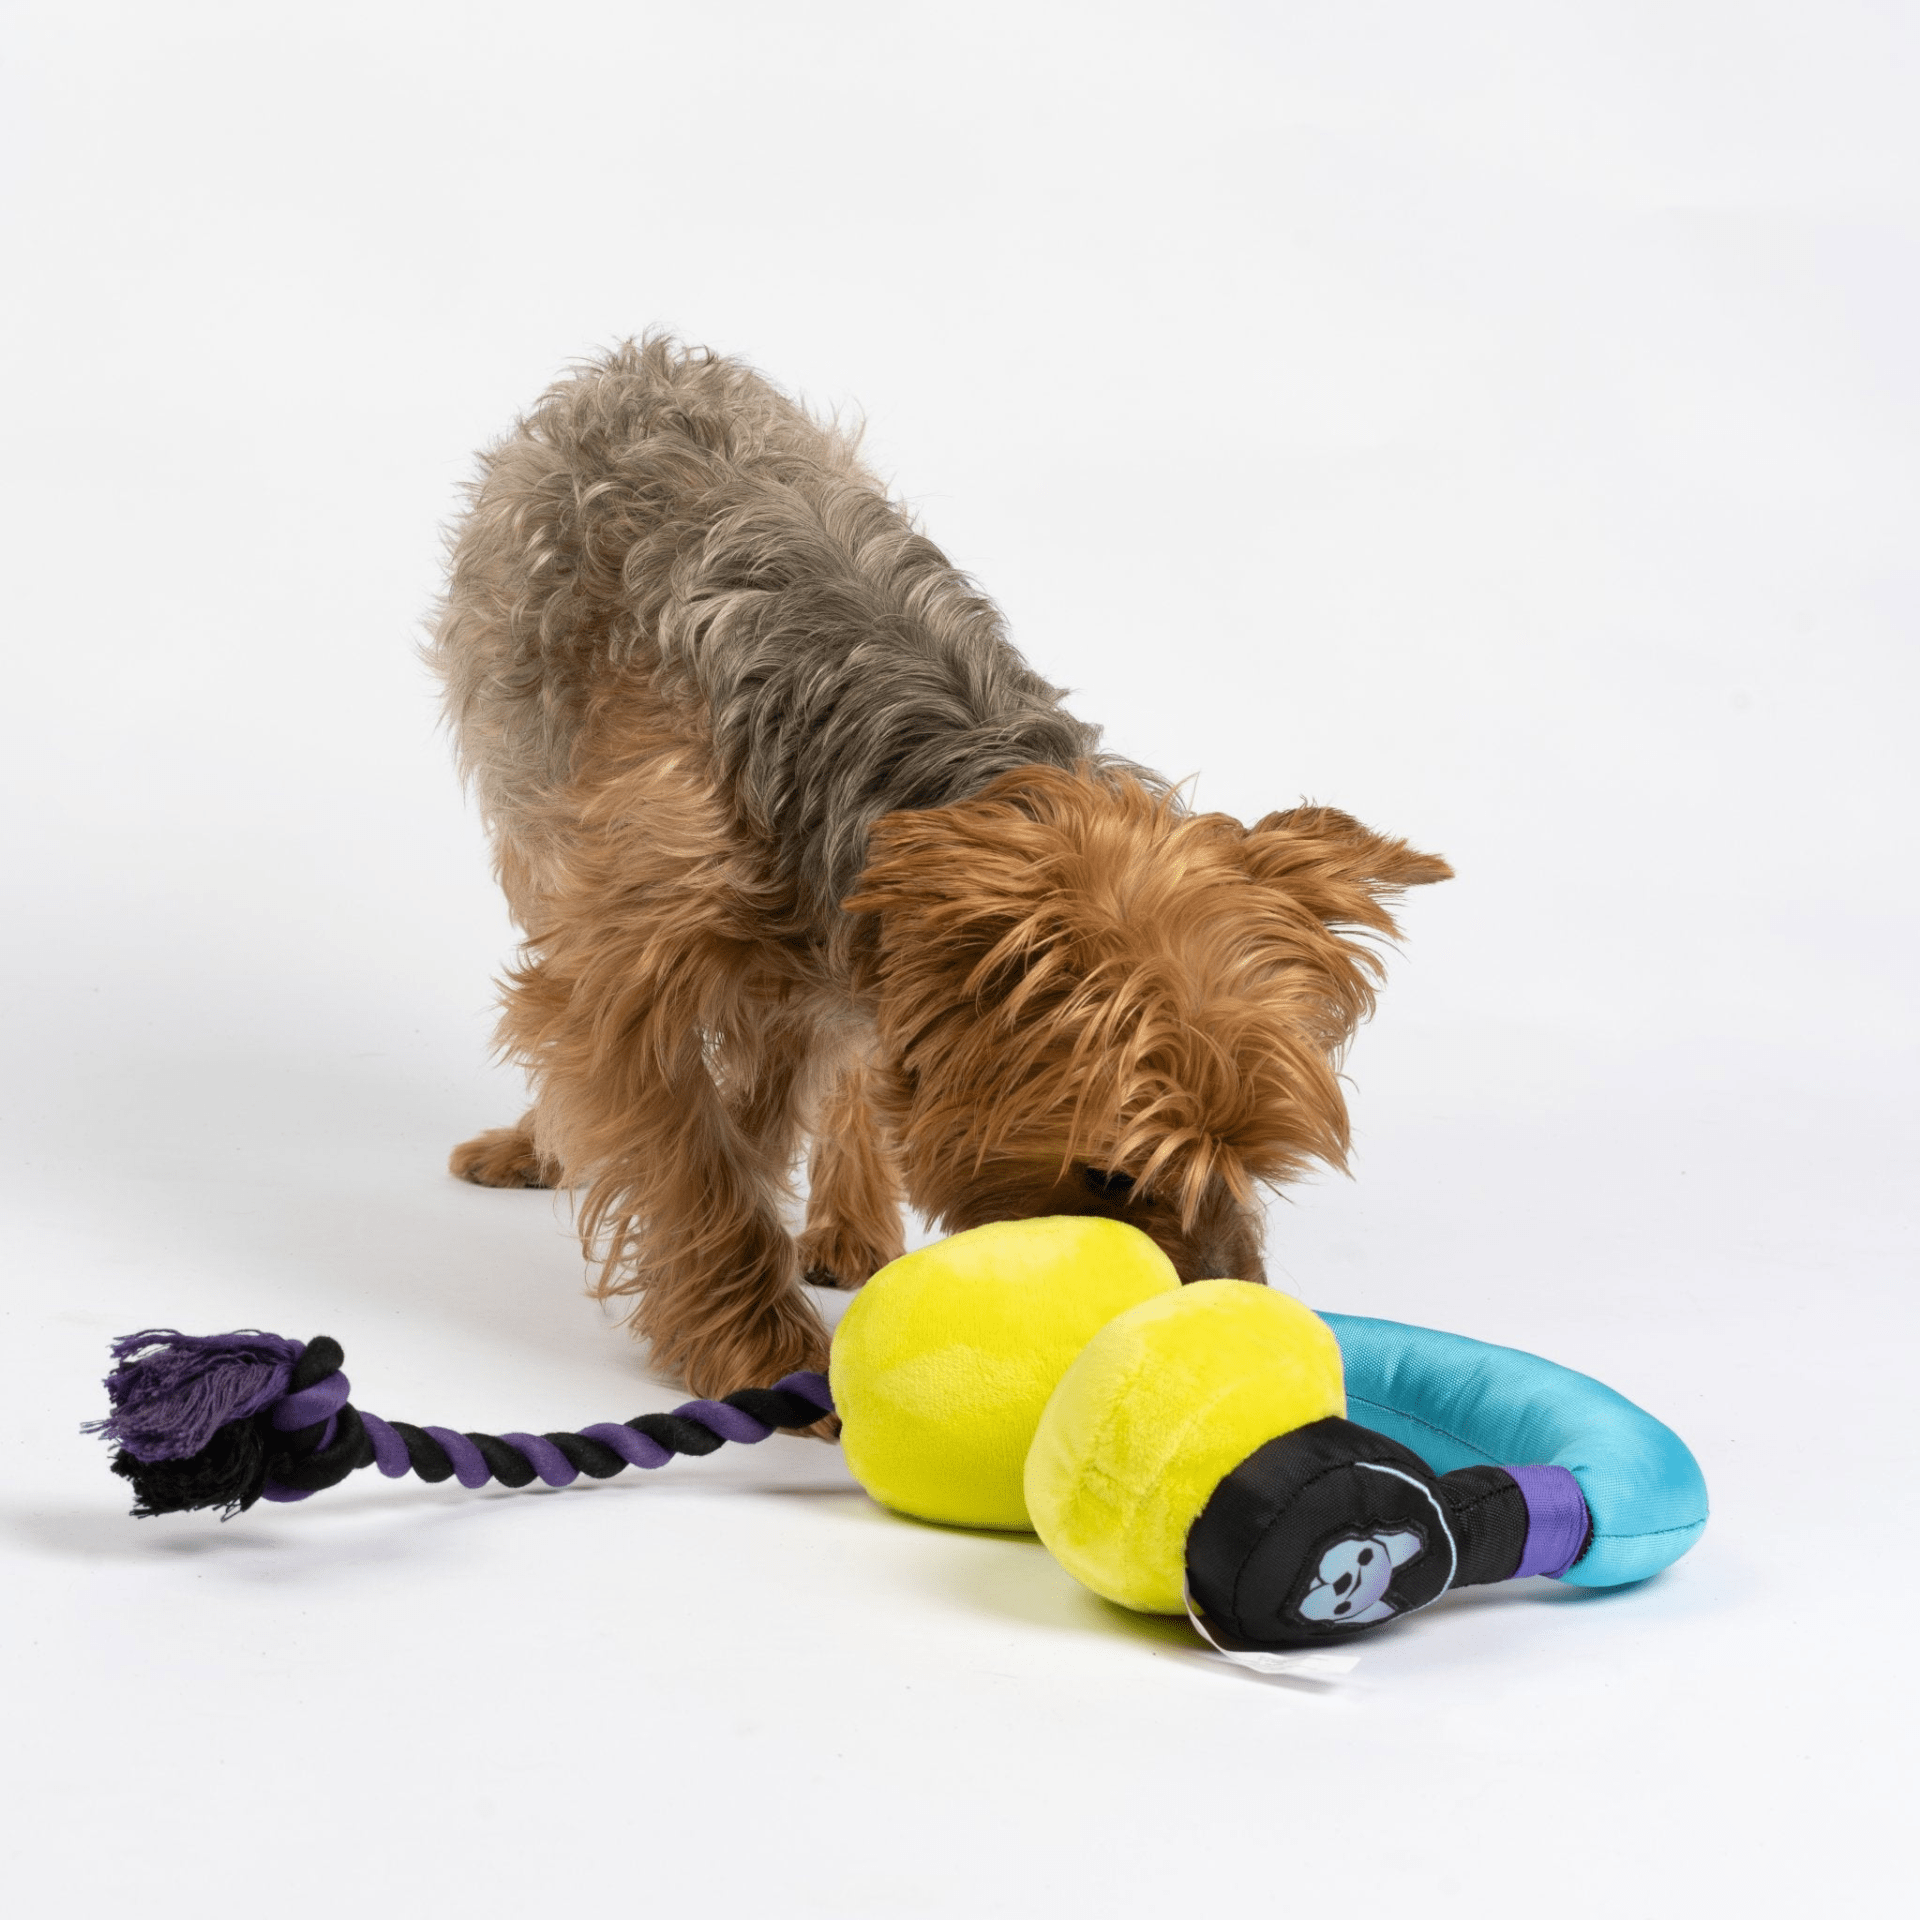 Dog and Pet Stuff Headphones Dog Toy